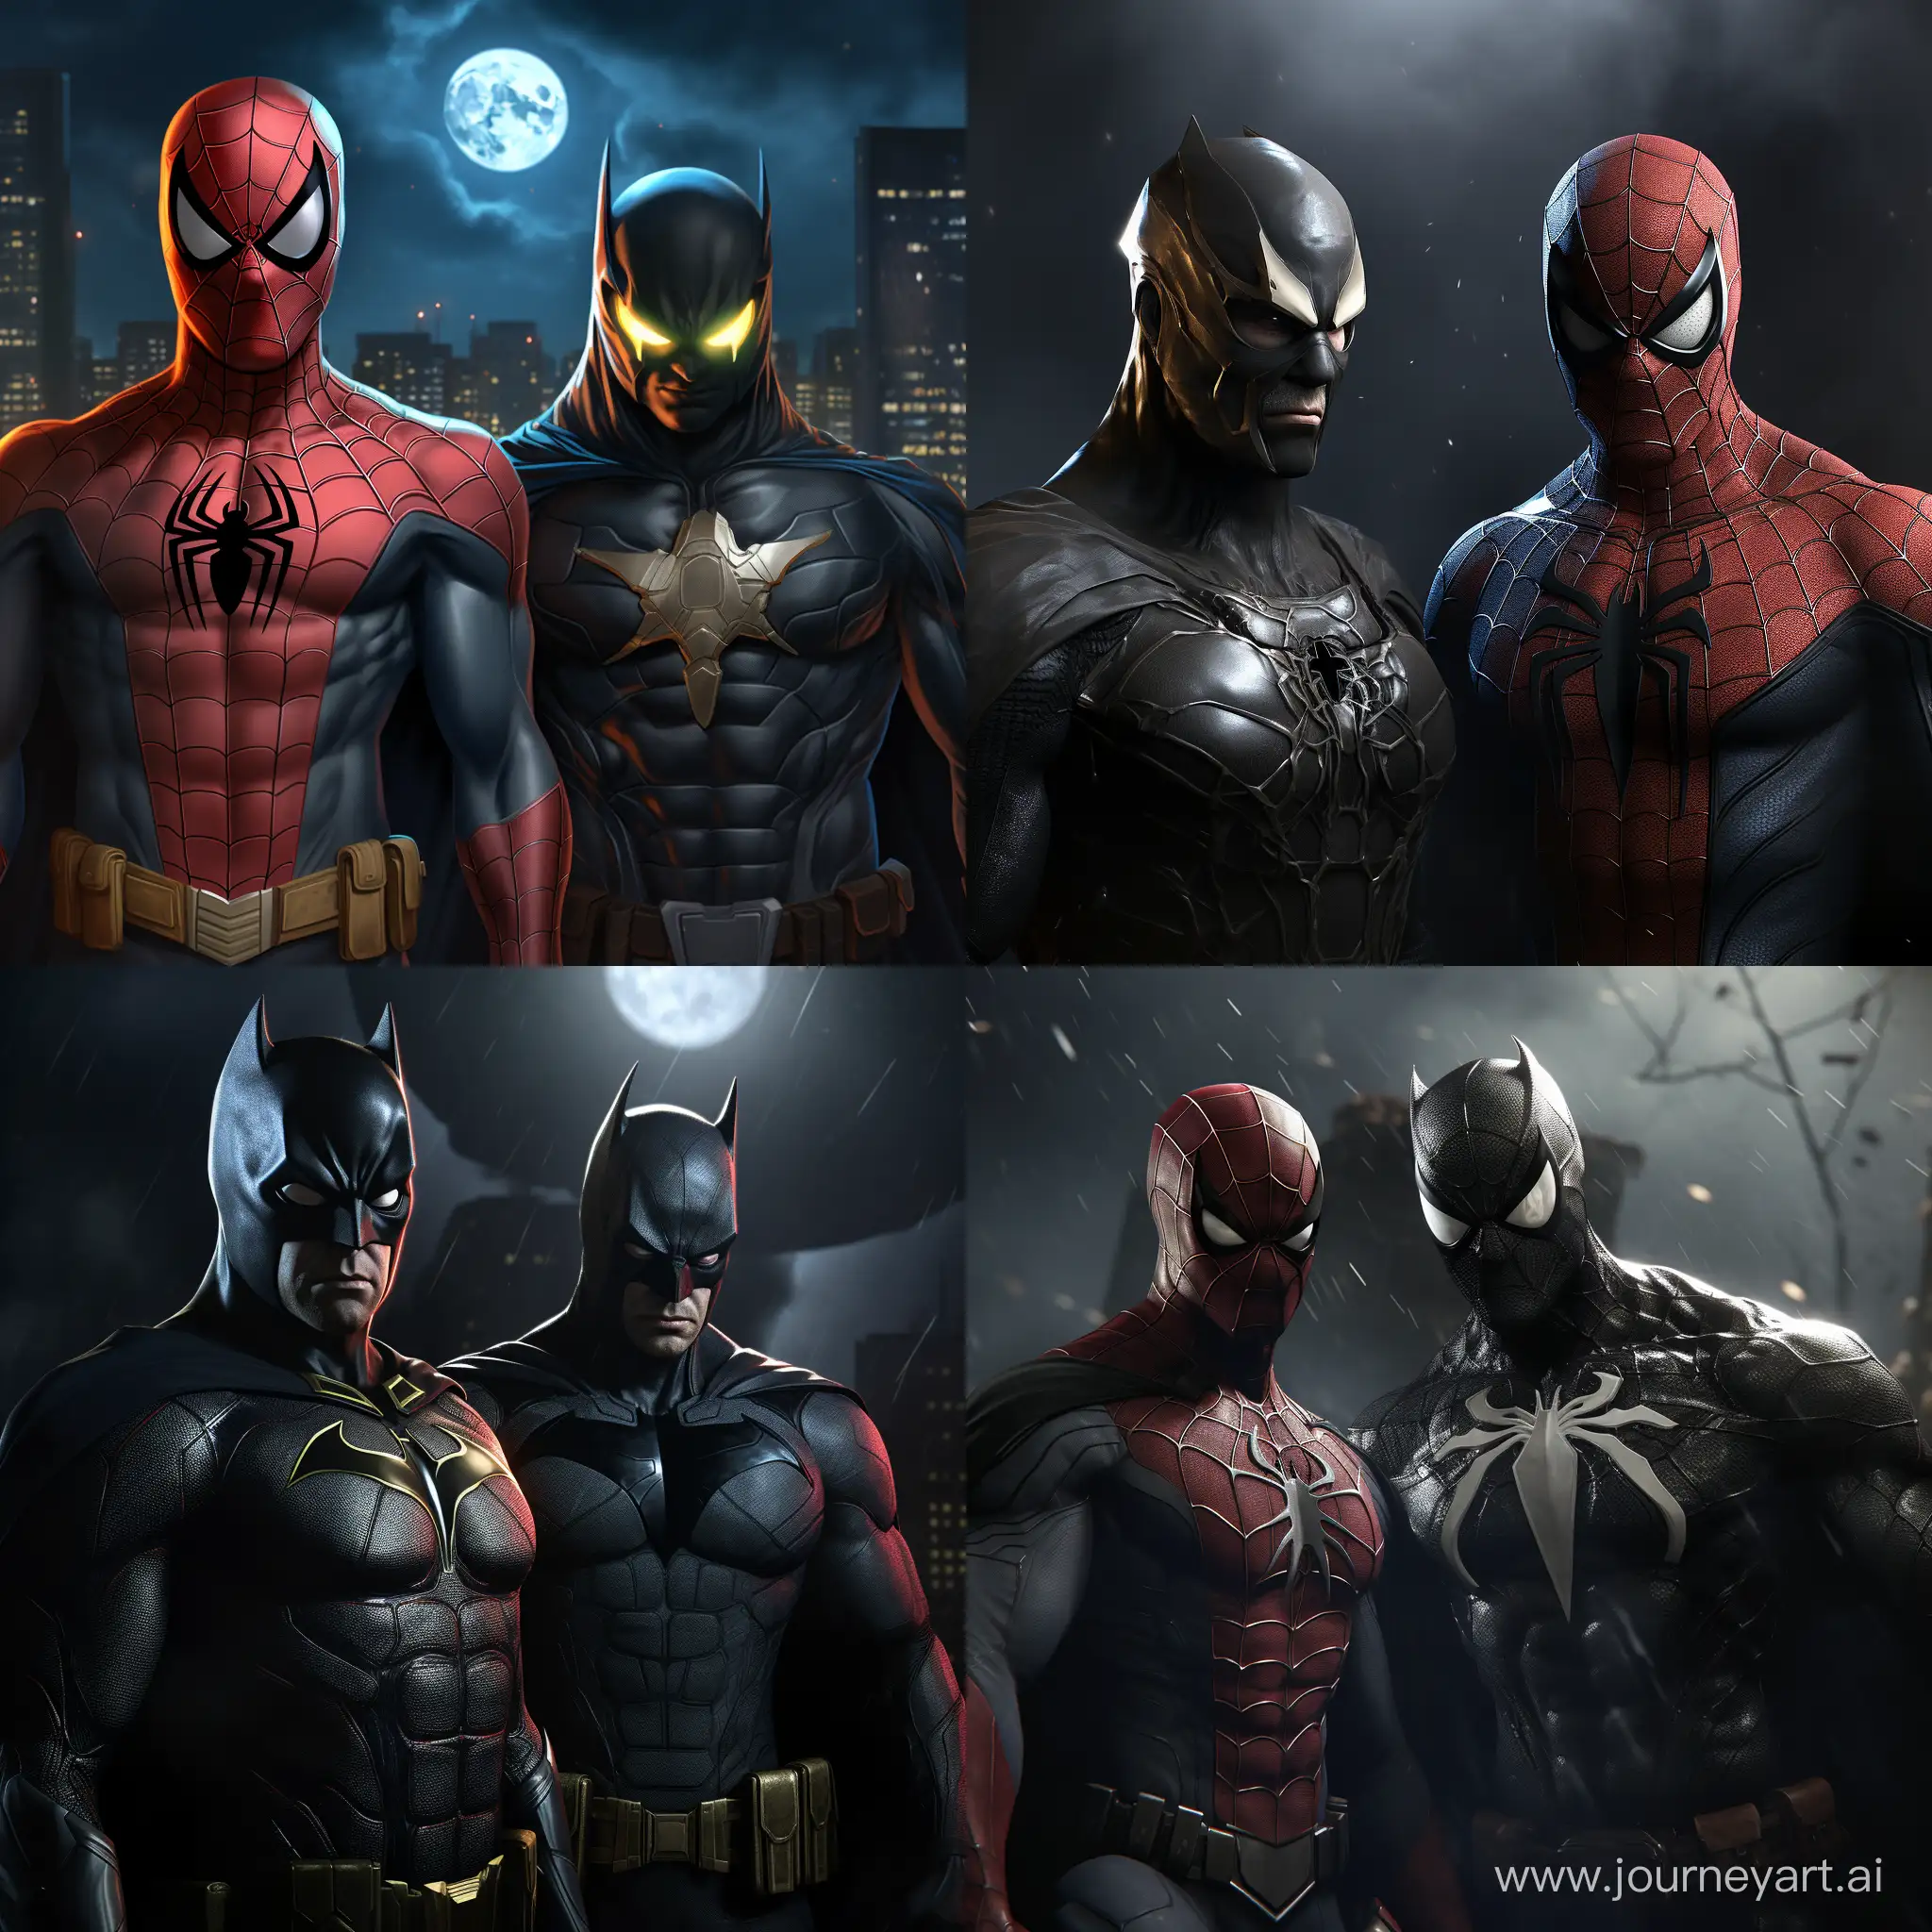 Epic-Encounter-SpiderMan-and-Batman-TeamUp-Art